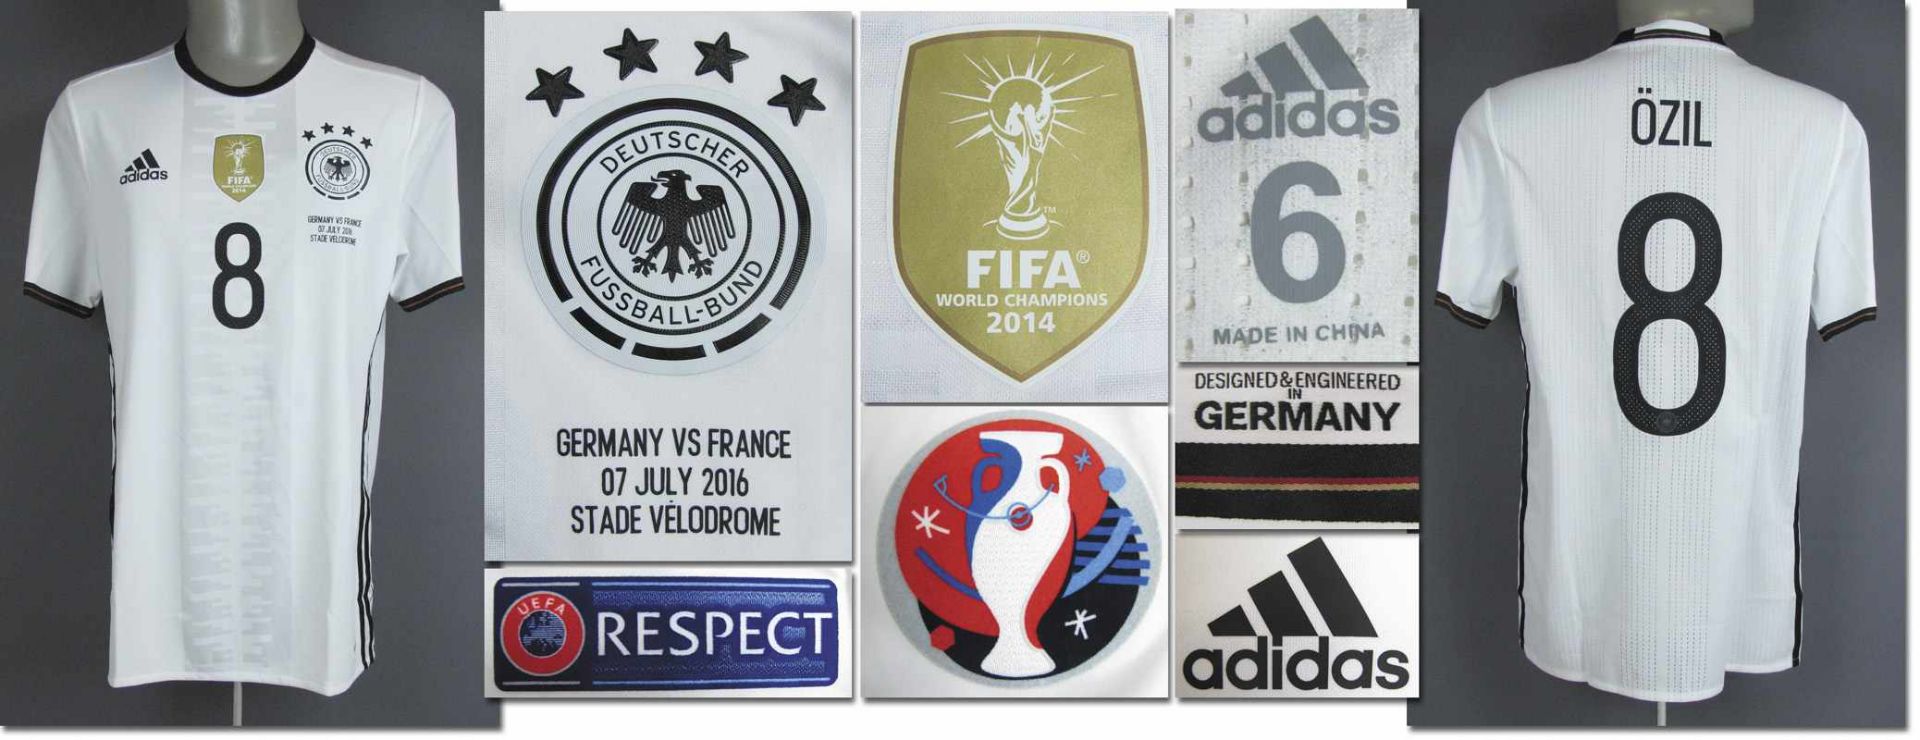 UEFA EURO 2016 match worn football shirt Germany - Original match worn shirt Germany with number